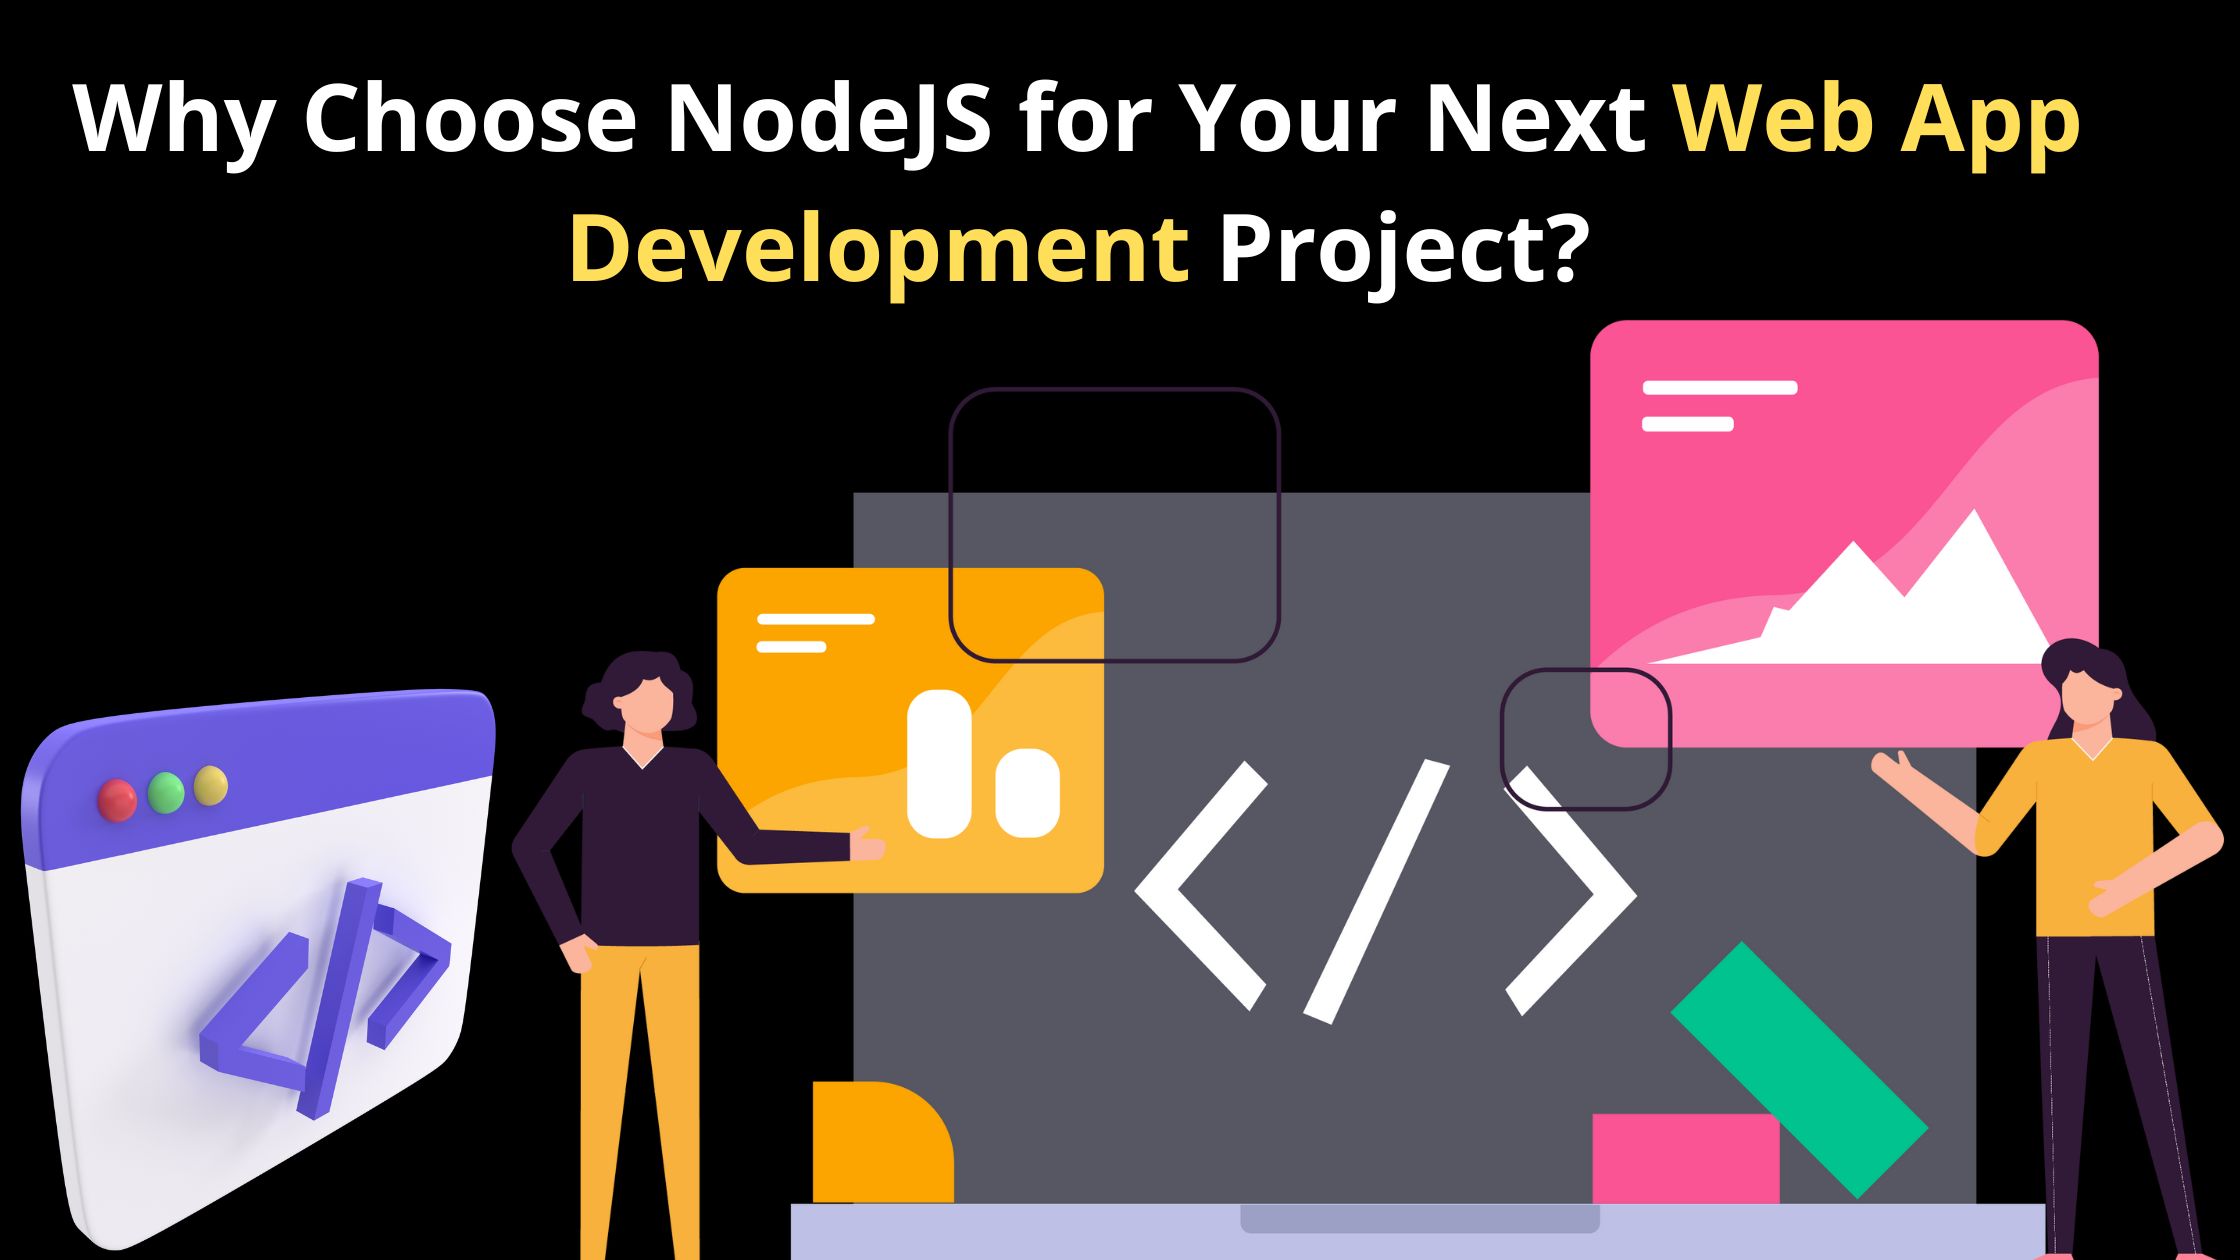 Why Choose Nodejs for Your Next Web App Development Project?